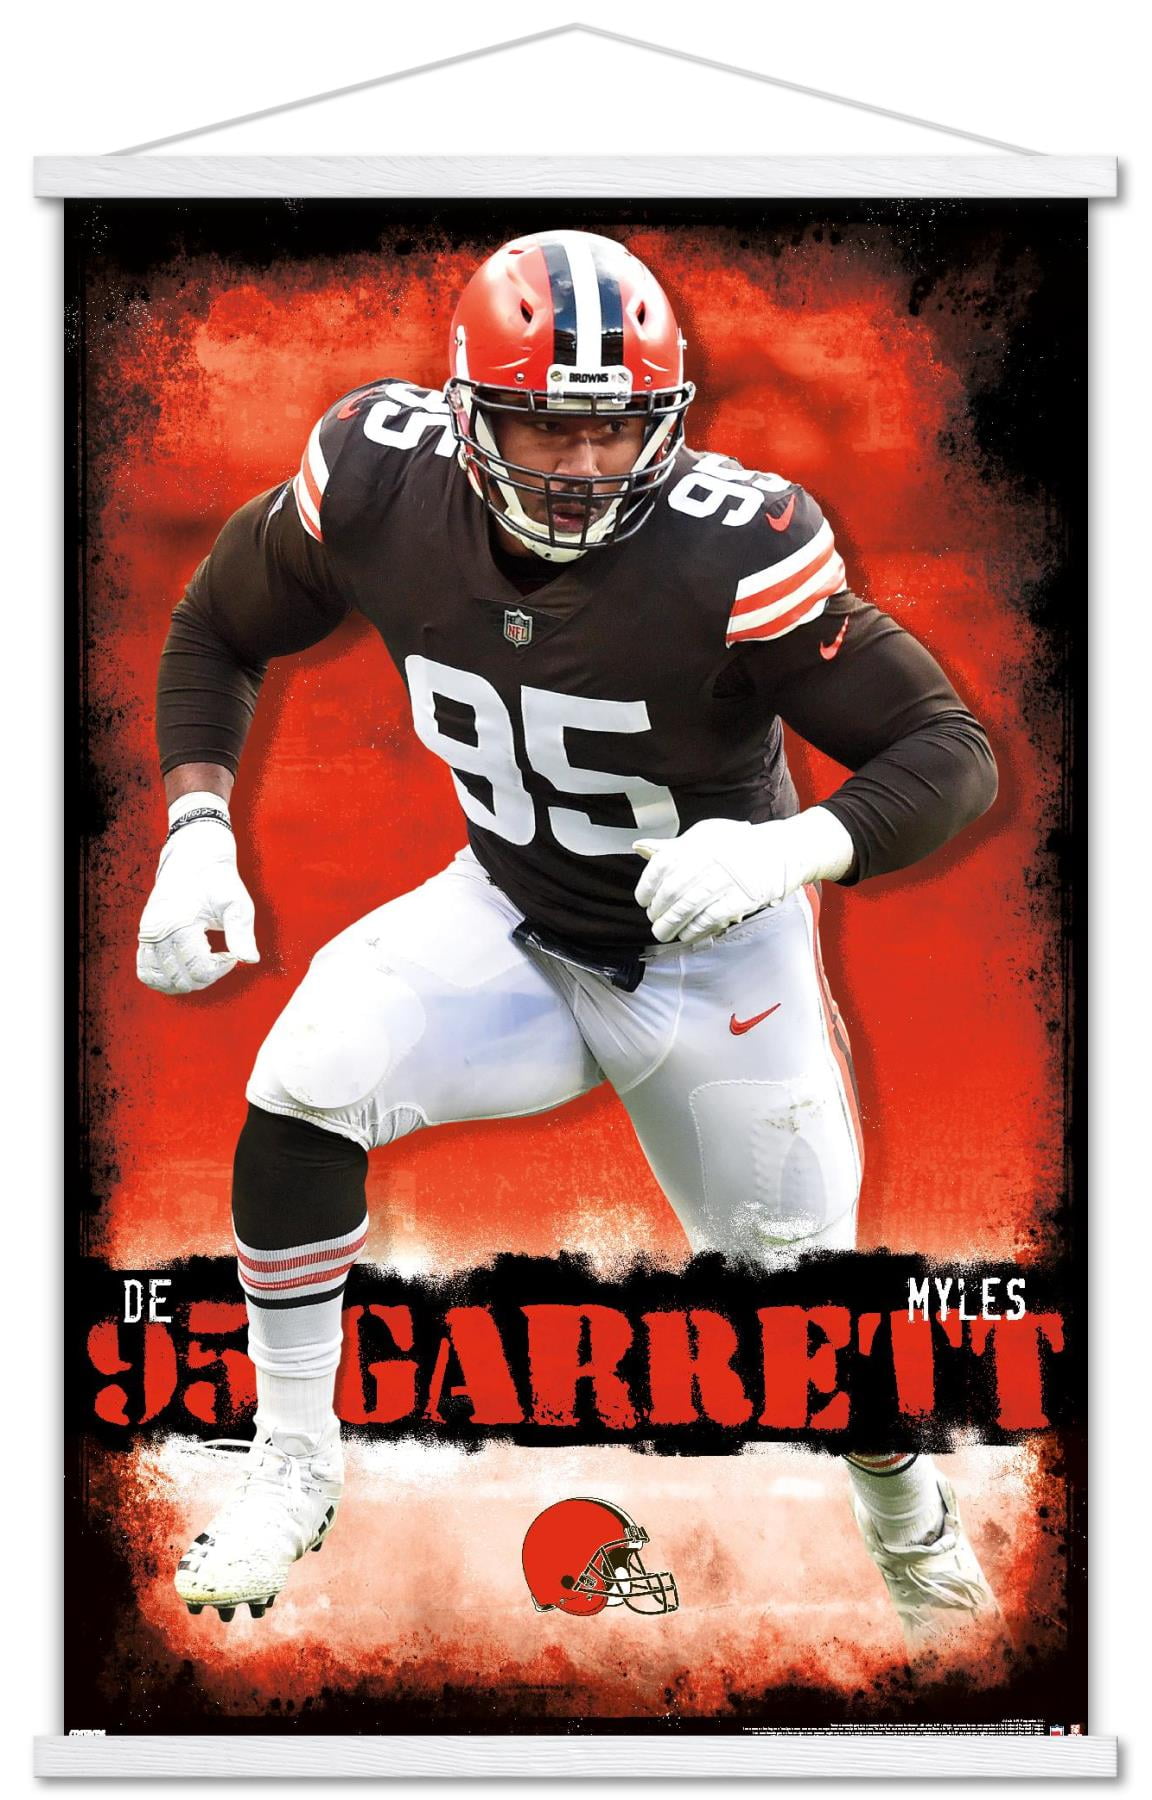 NFL Cleveland Browns - Myles Garrett 21 Wall Poster, 22.375 x 34 